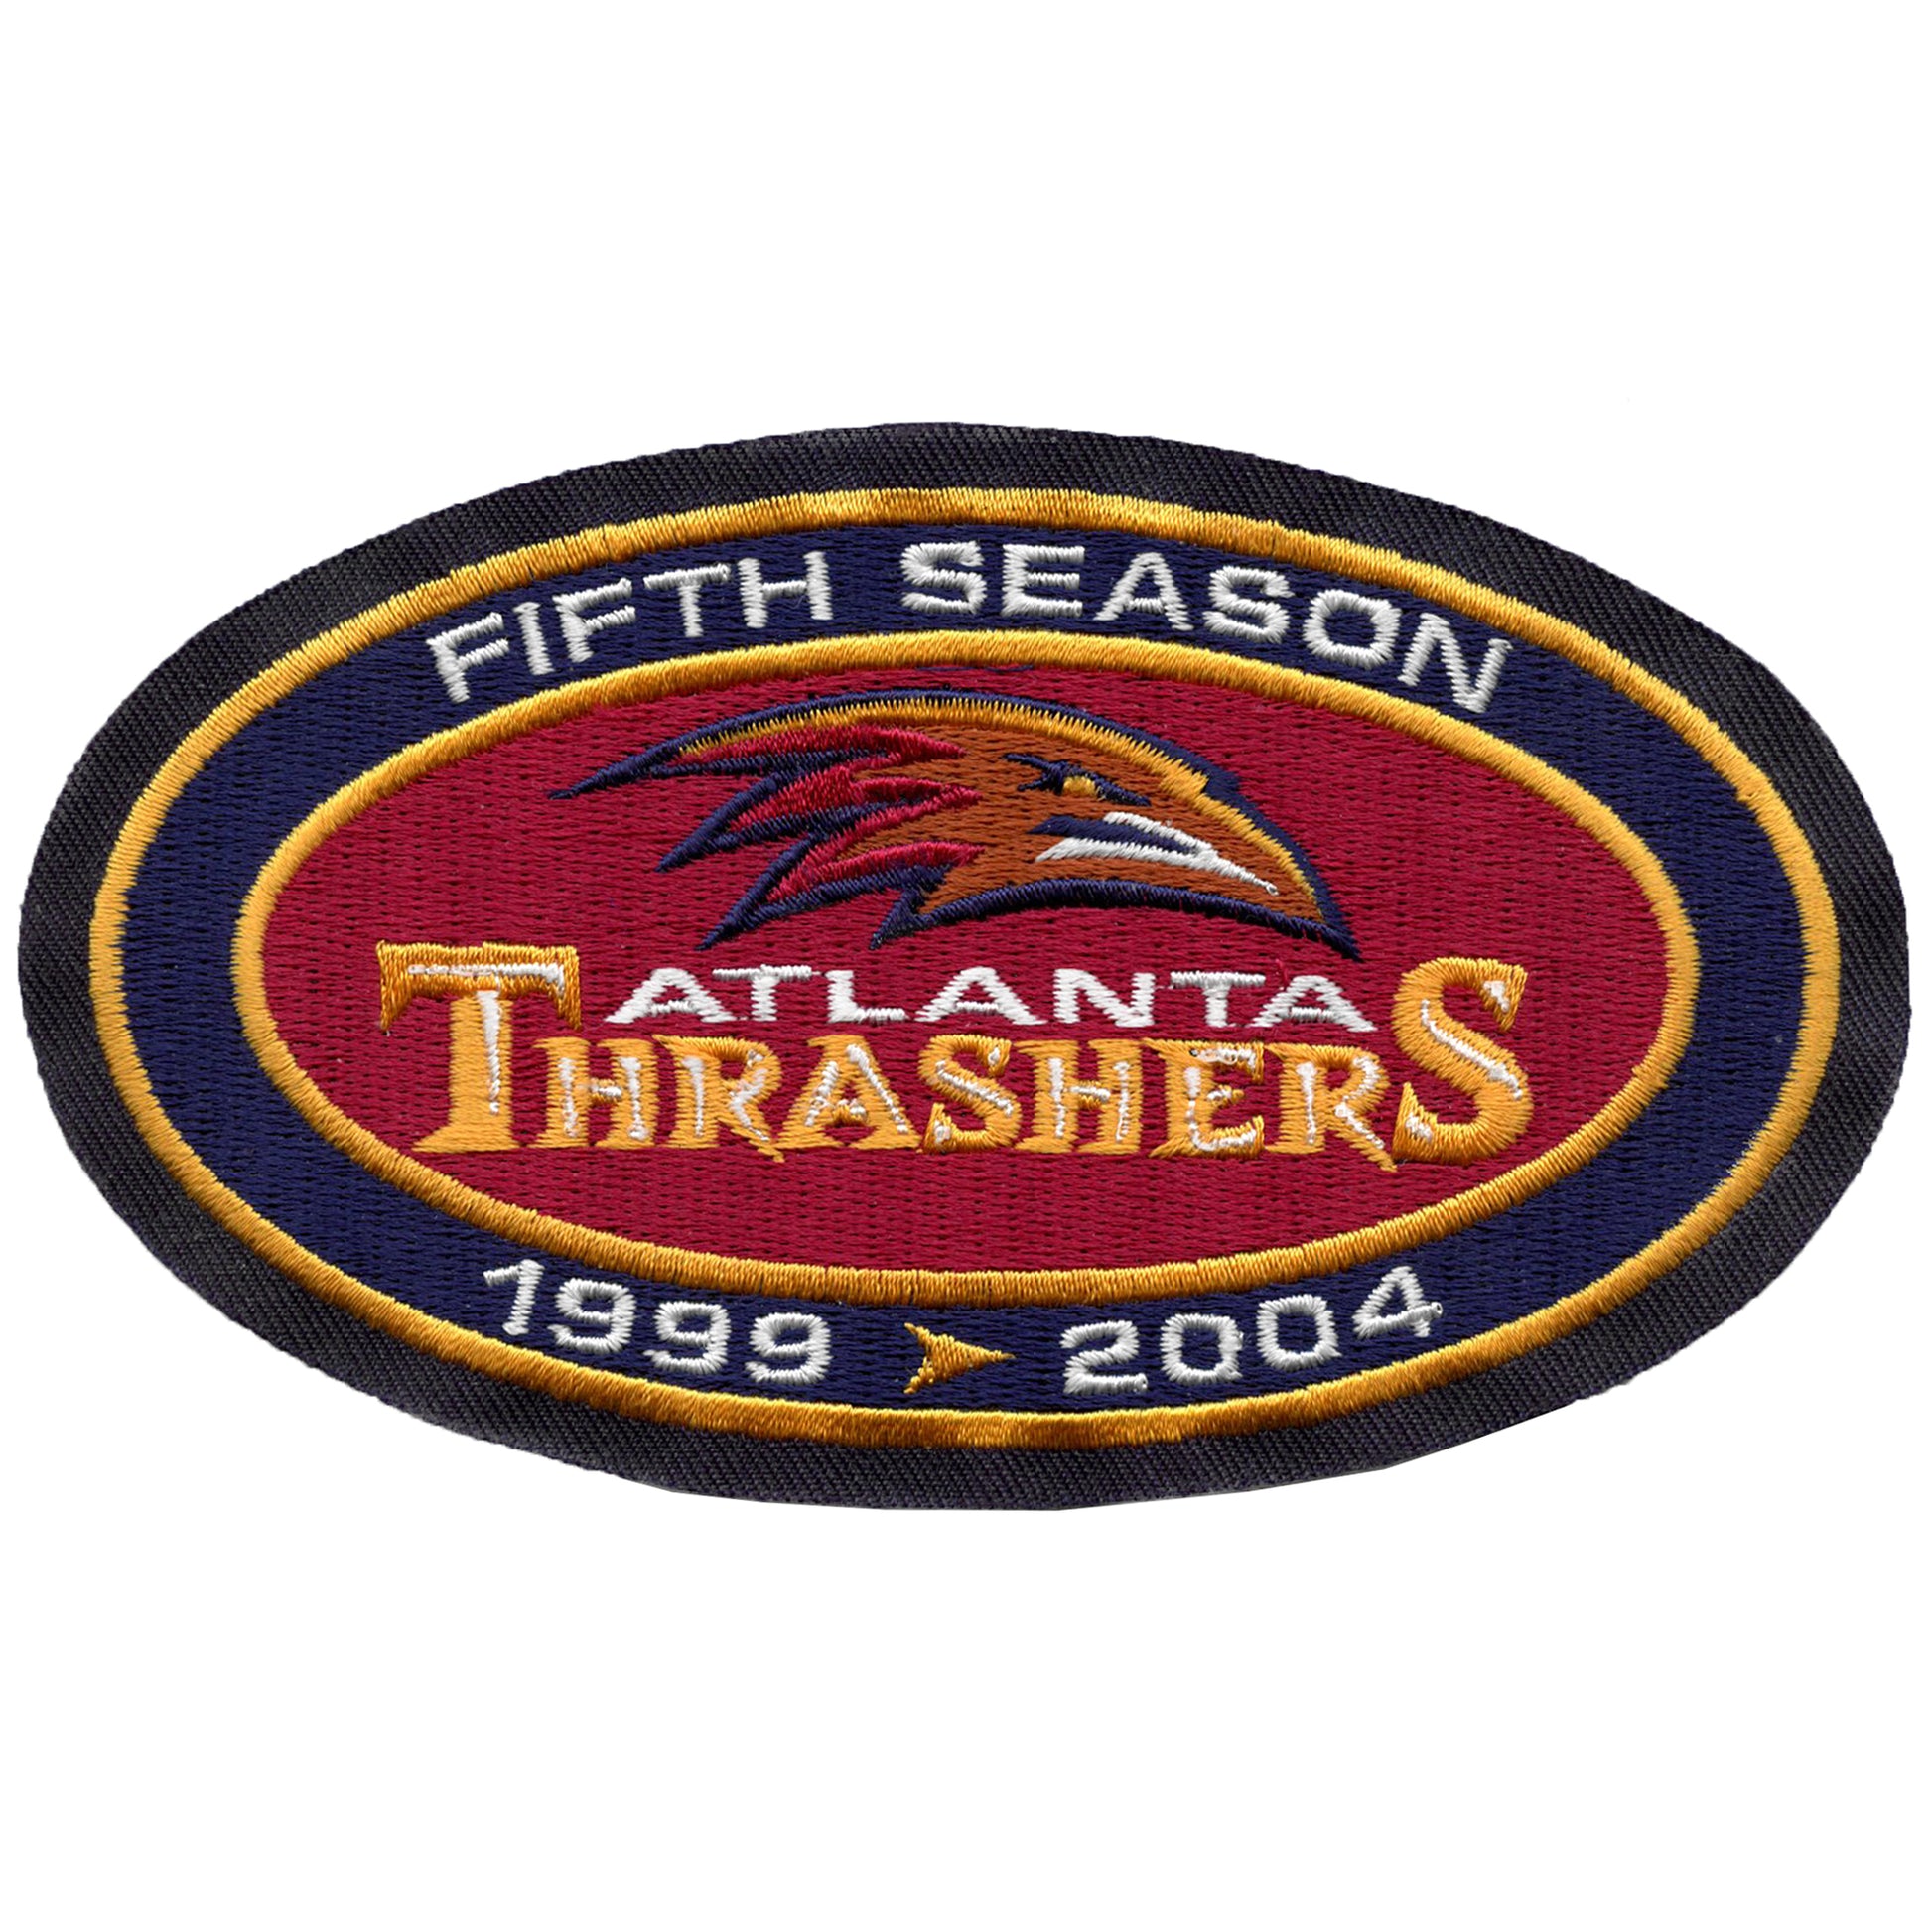 2003-04 Atlanta Thrashers 5th Season Team Anniversary Patch (Blue Ver.)